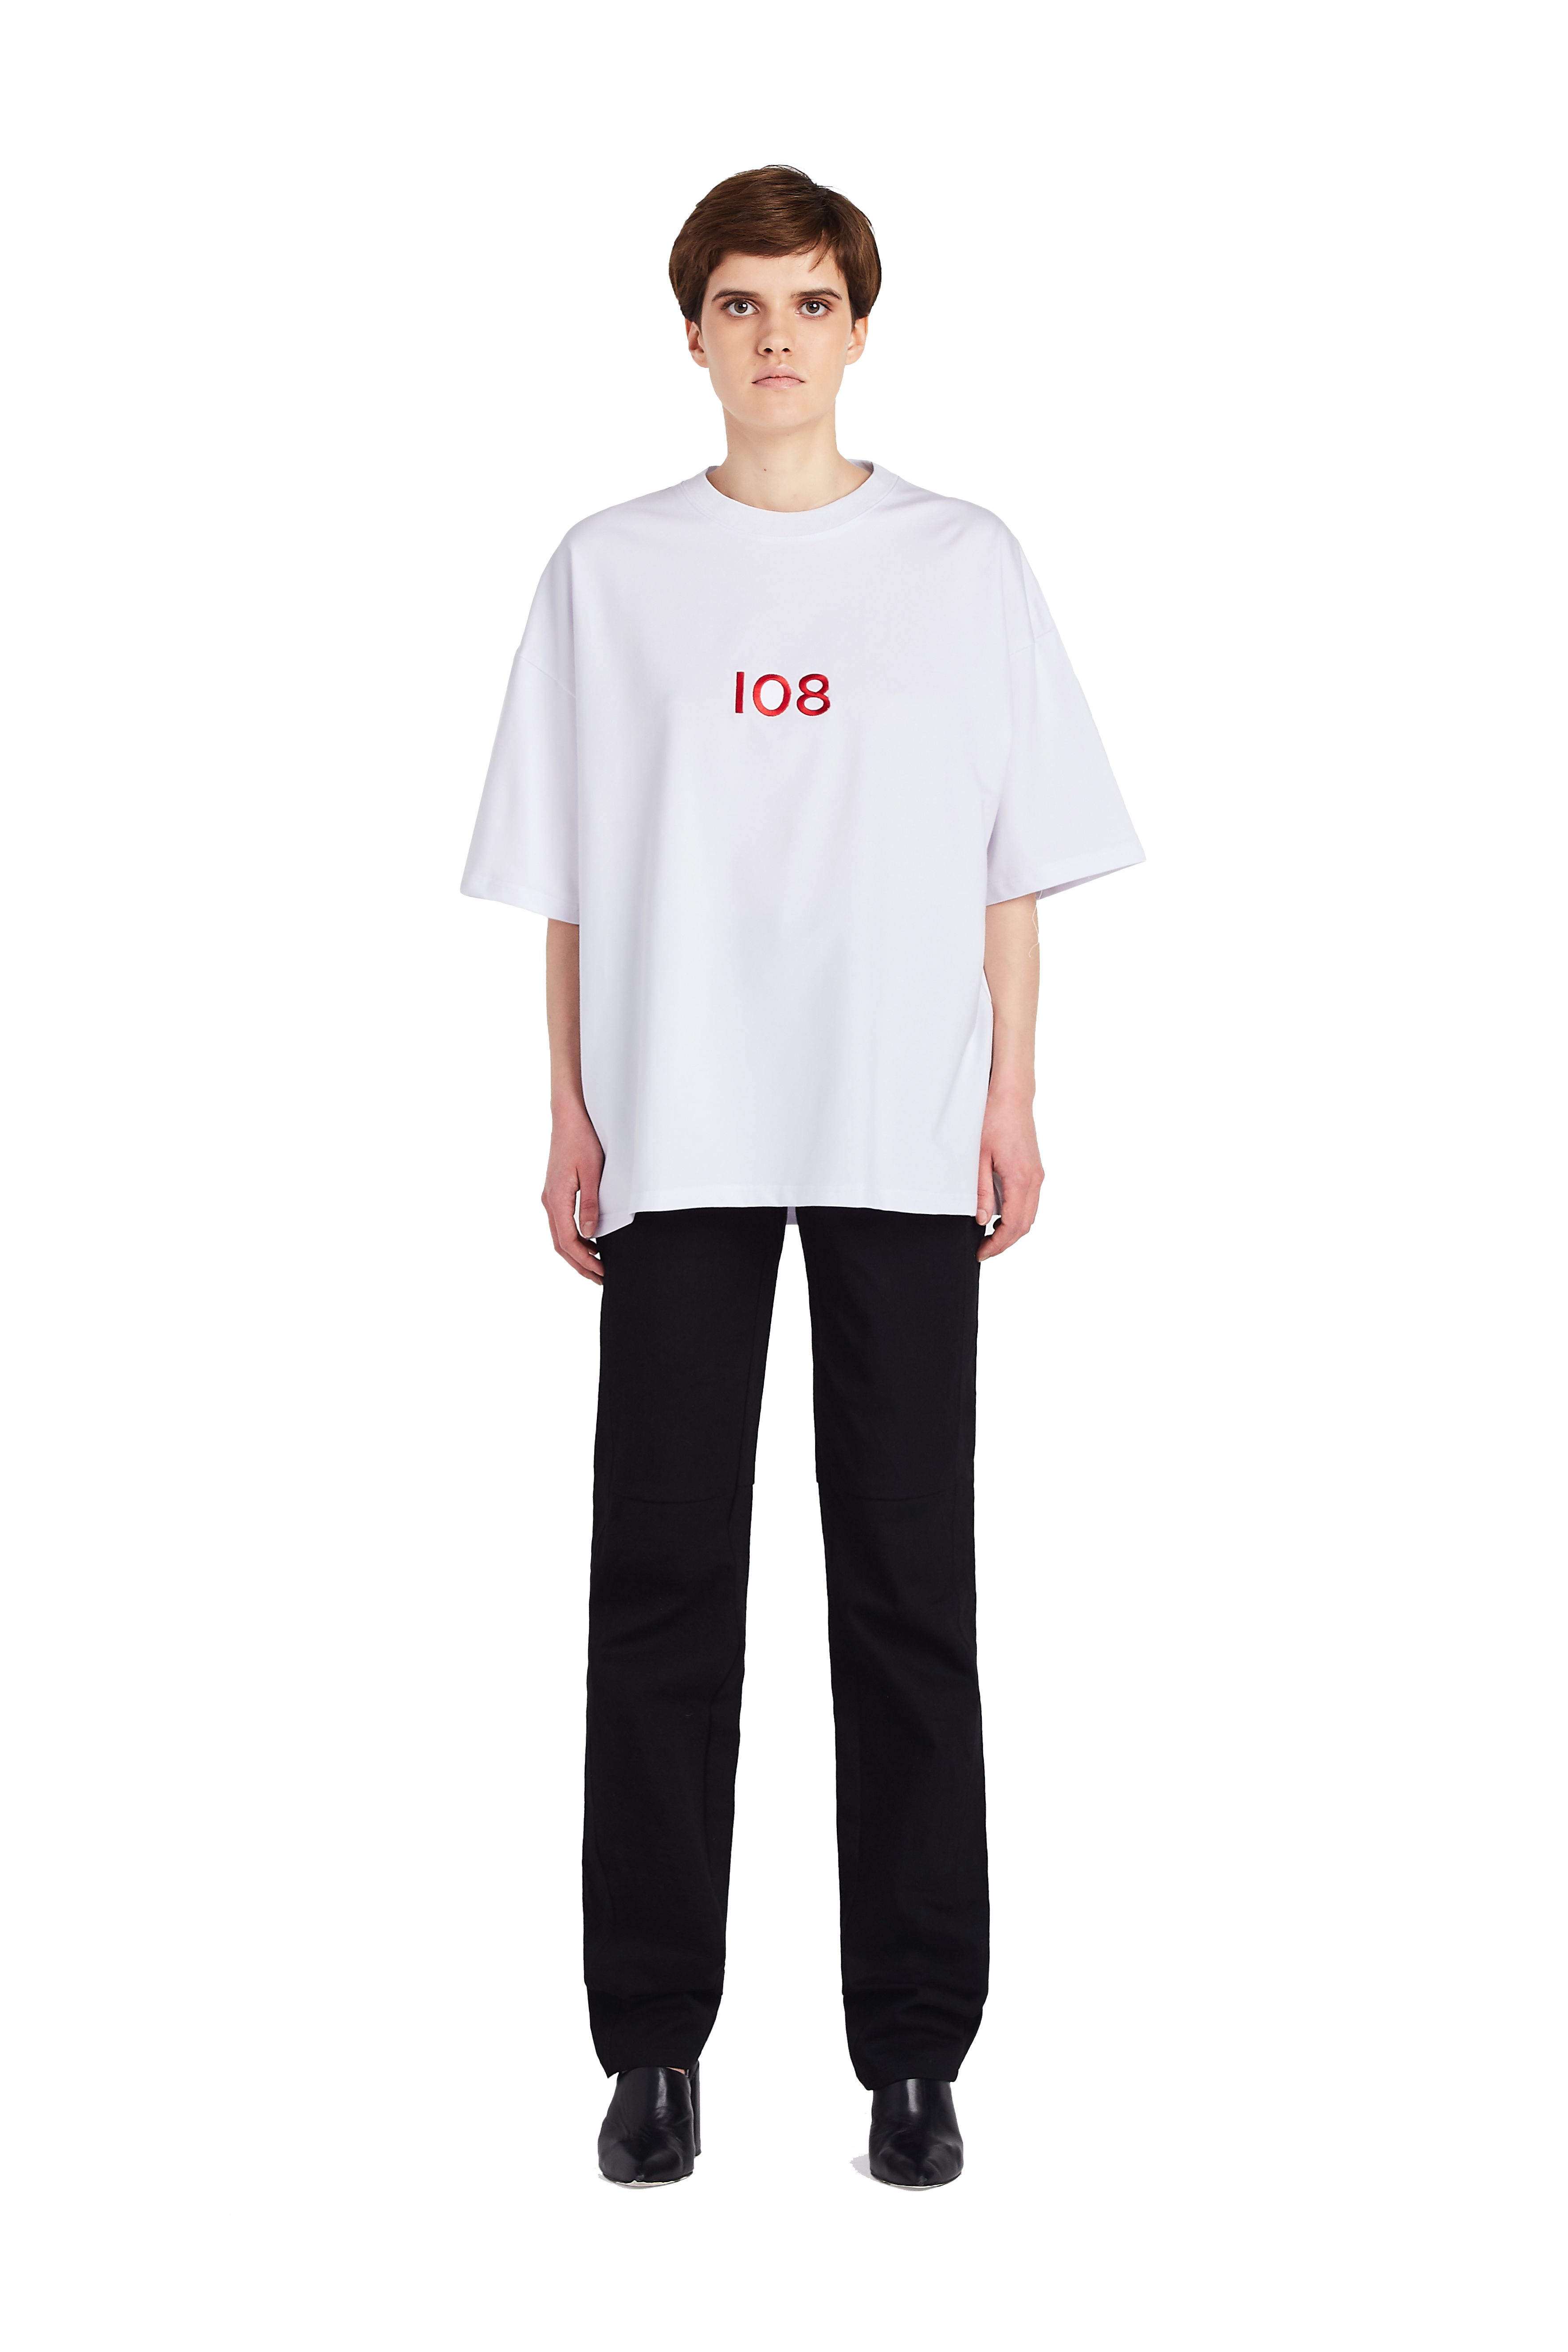 Белая футболка СИСТЕМА 108